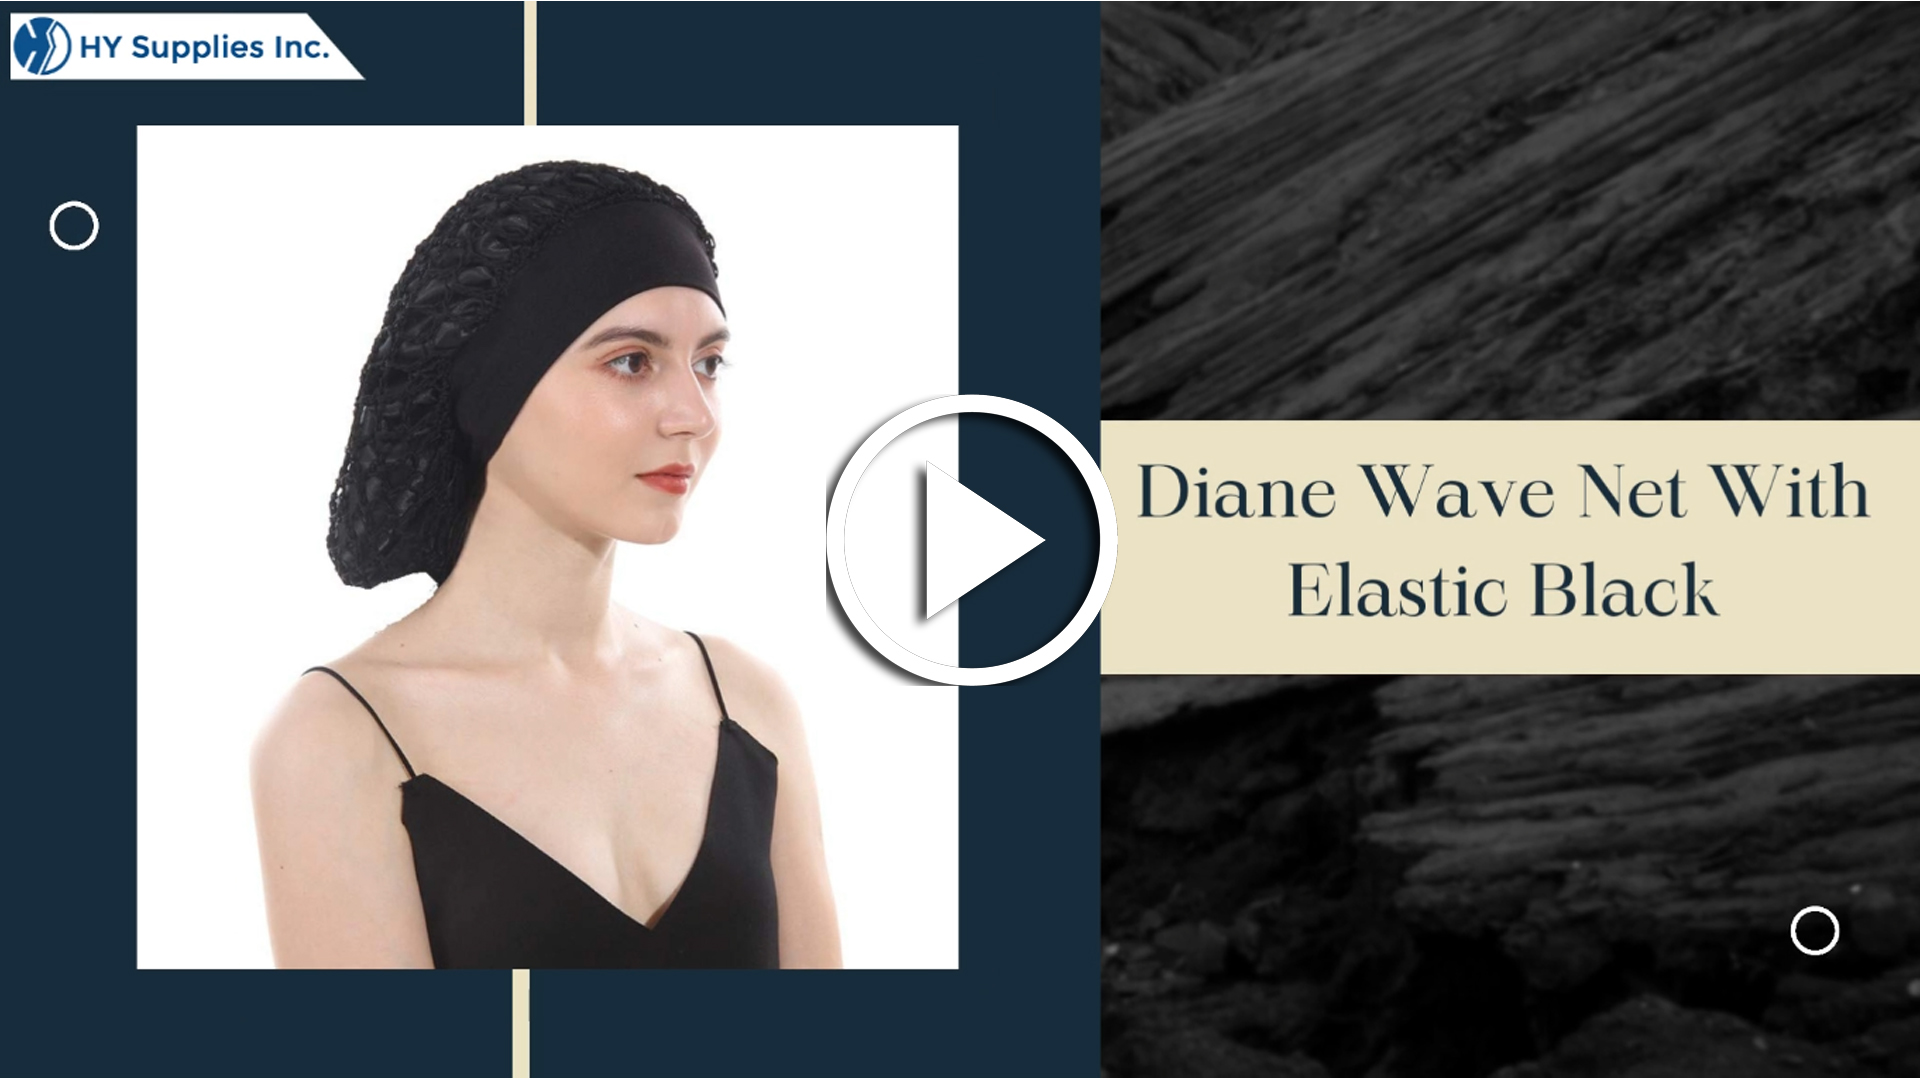 Diane Wave Net With Elastic Black